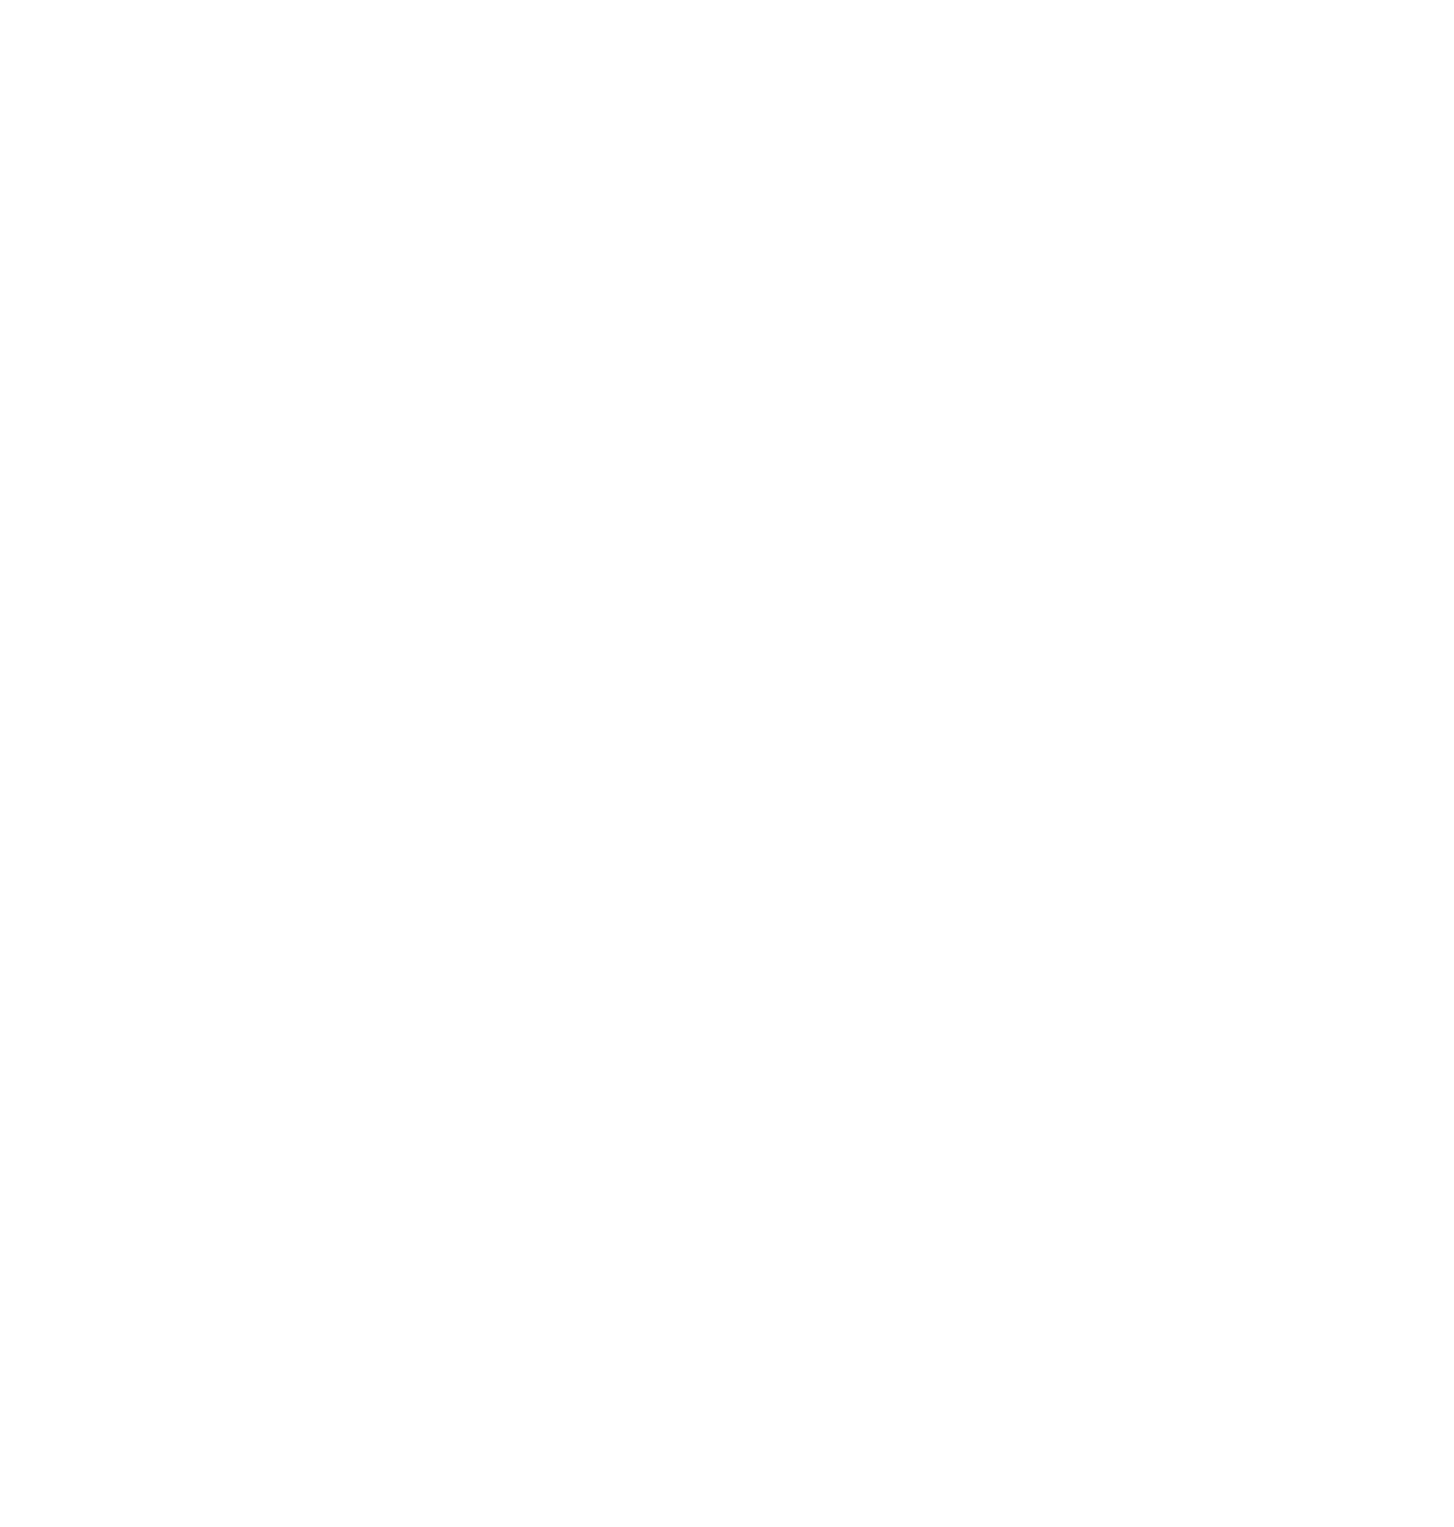 Maruwa logo for dark backgrounds (transparent PNG)